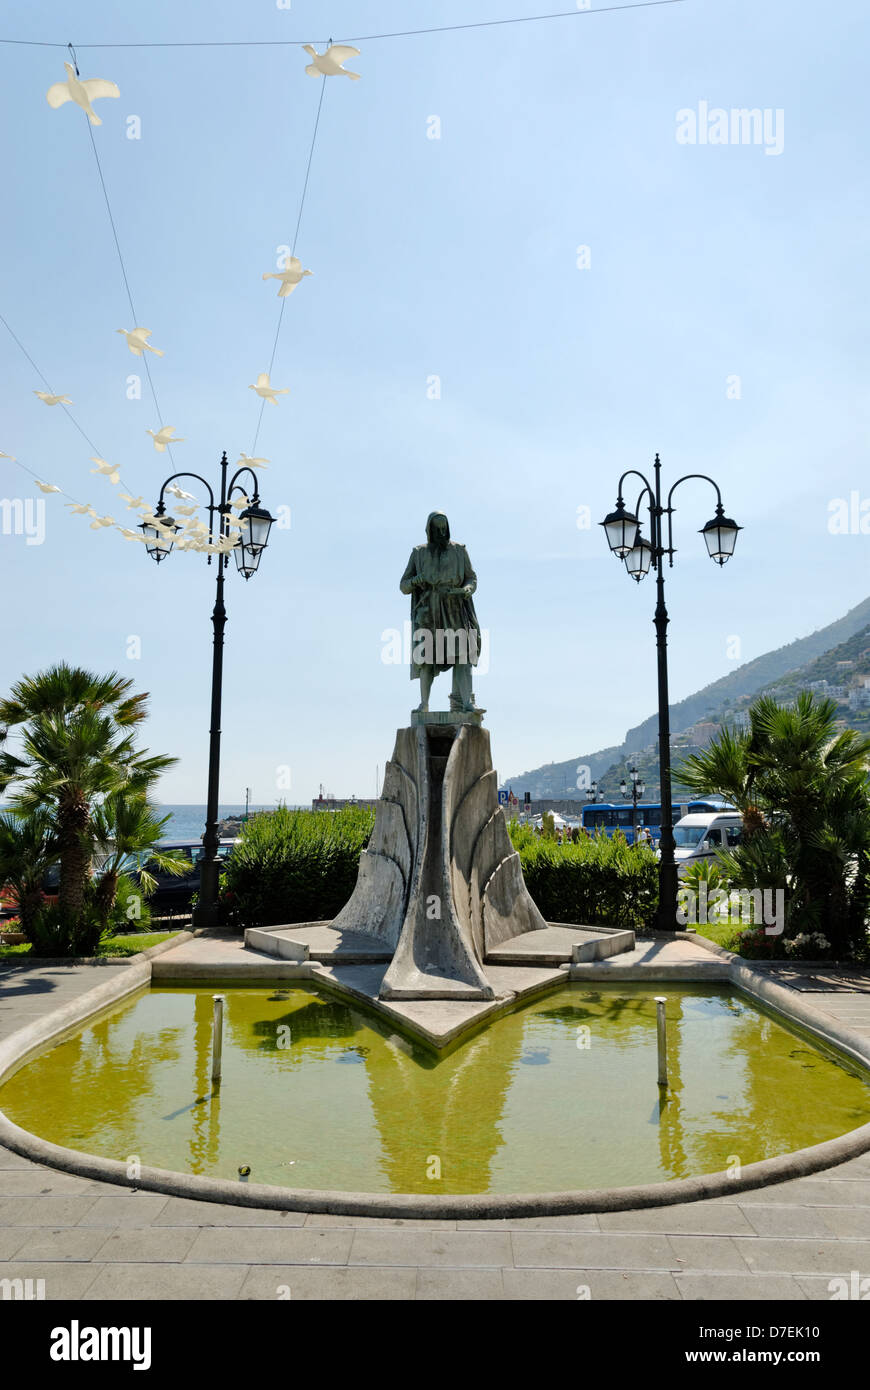 Amalfi. Campania. Italy. View of the statute of Flavio Gioia in the Piazza Flavio Gioia in the town of Amalfi. A merchant naviga Stock Photo